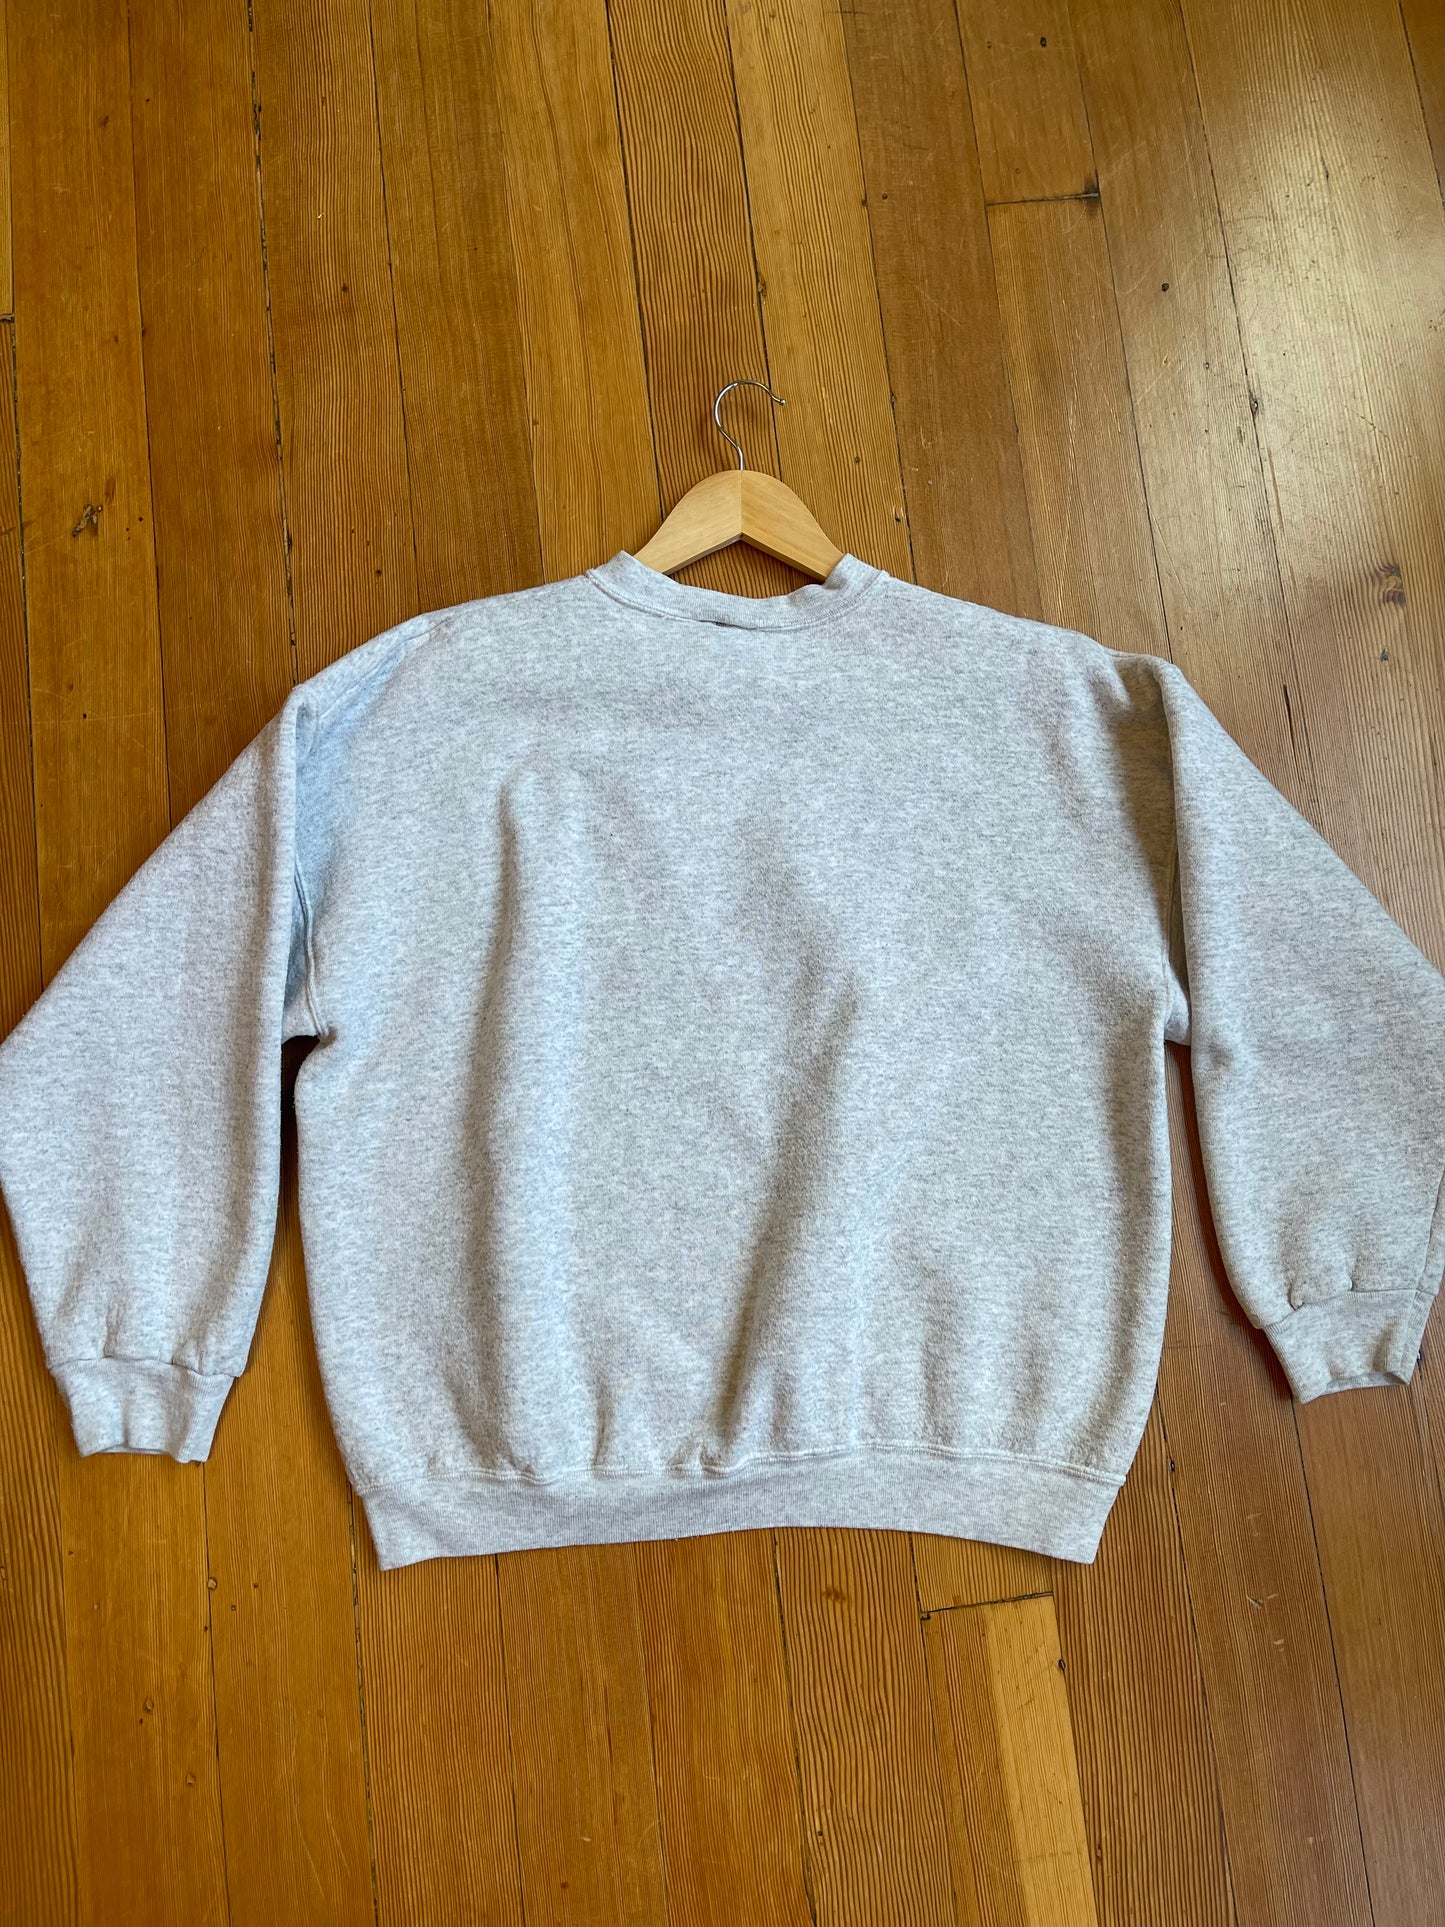 Vintage Washington State University Sweatshirt - M/L